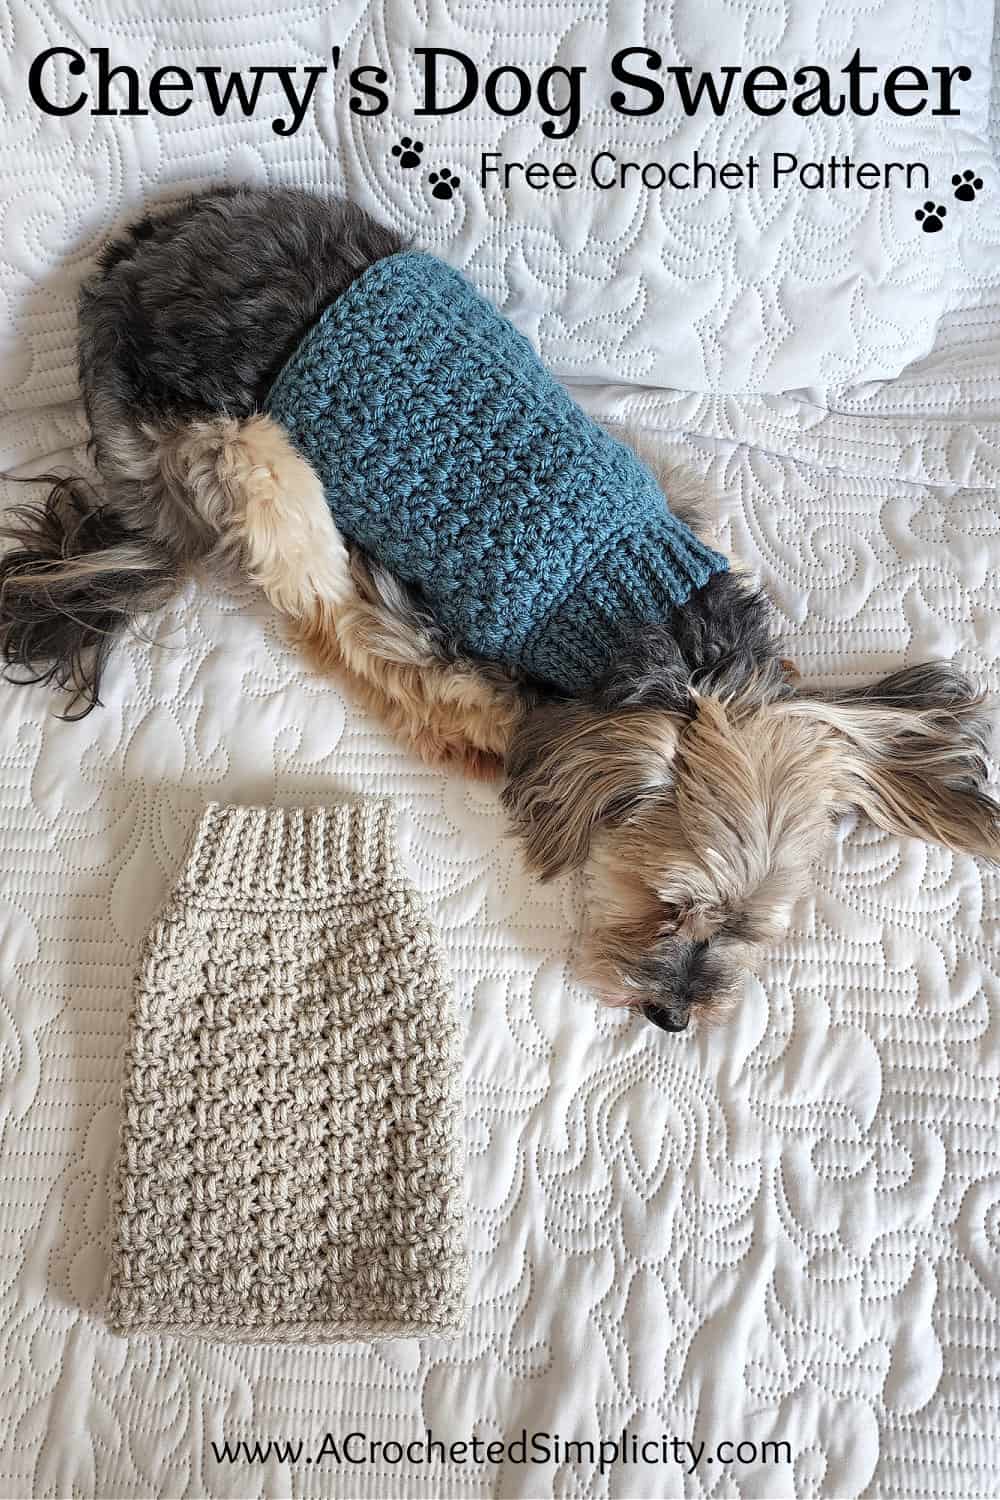 15 Free Crochet Dog Sweater Patterns for Beginners - Jera's Jamboree -  crochet, entertainment, self-care